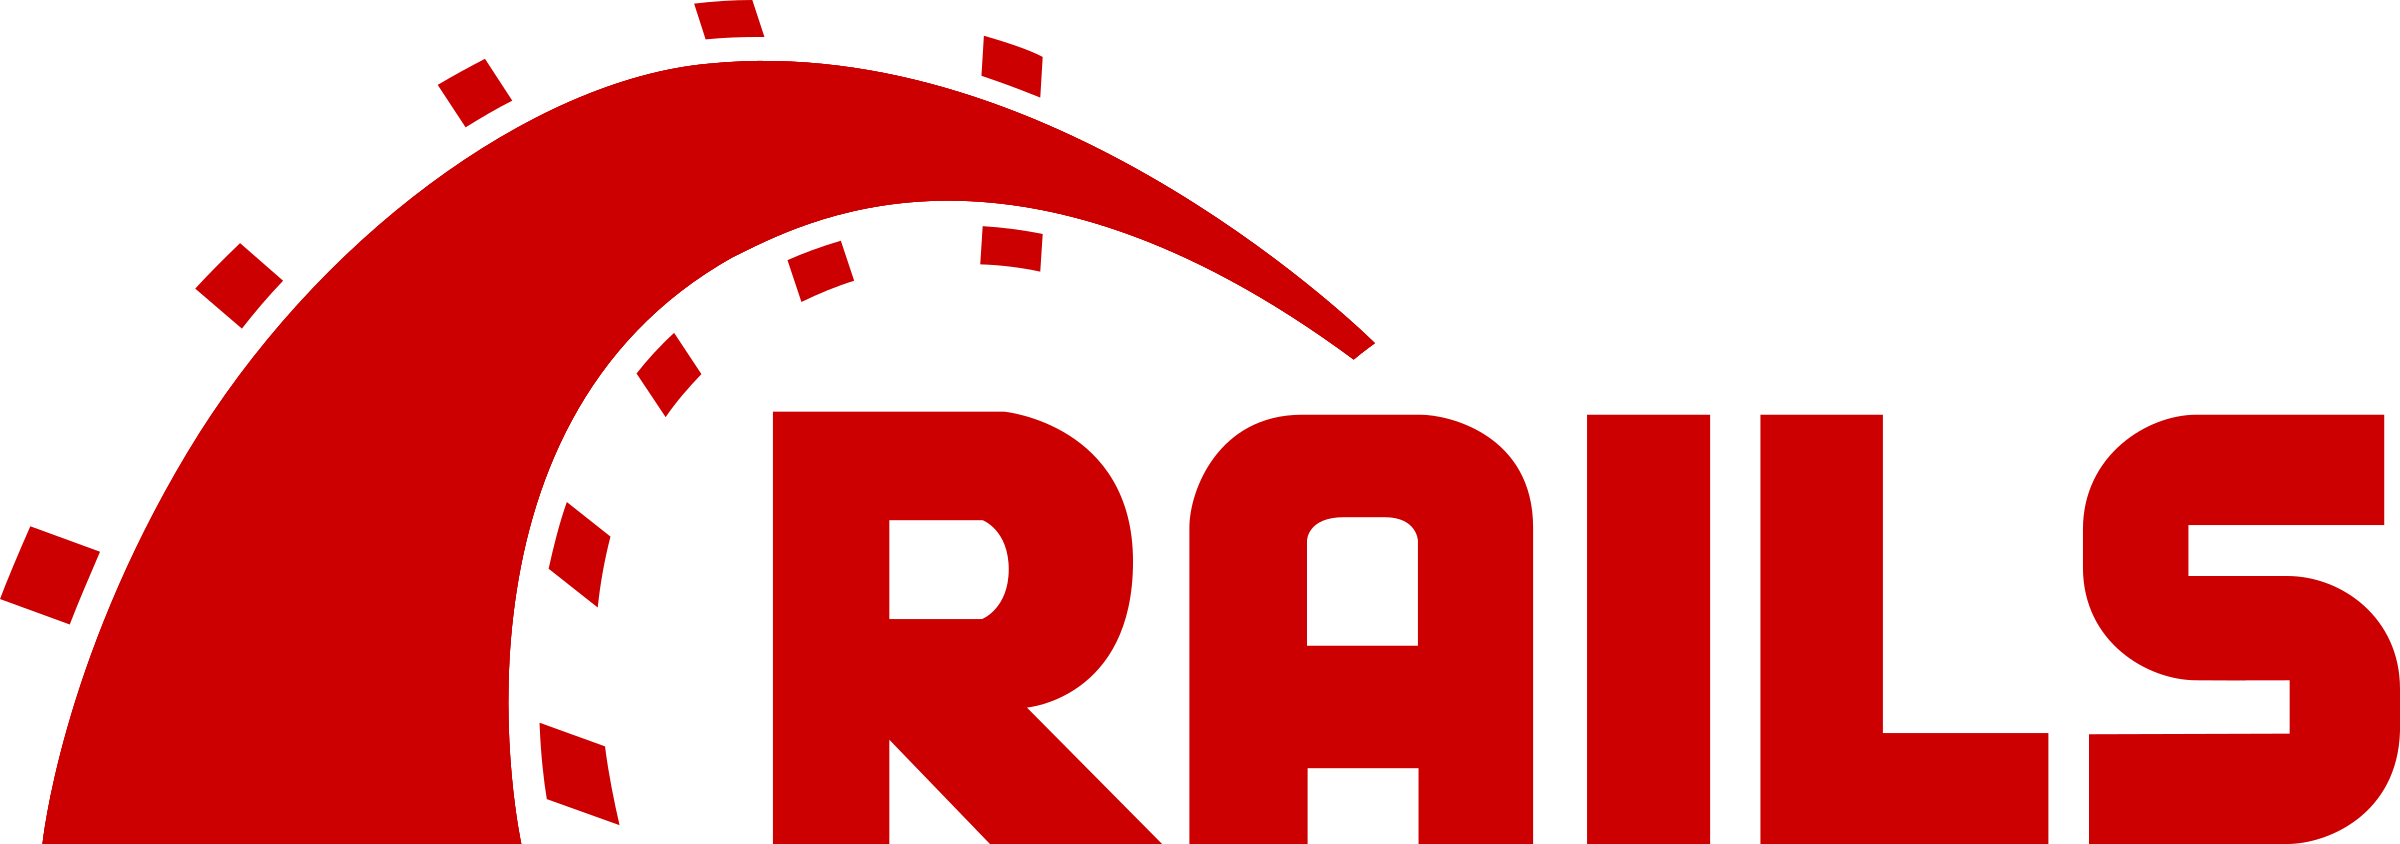 RocketBuild Ruby on Rails App Development